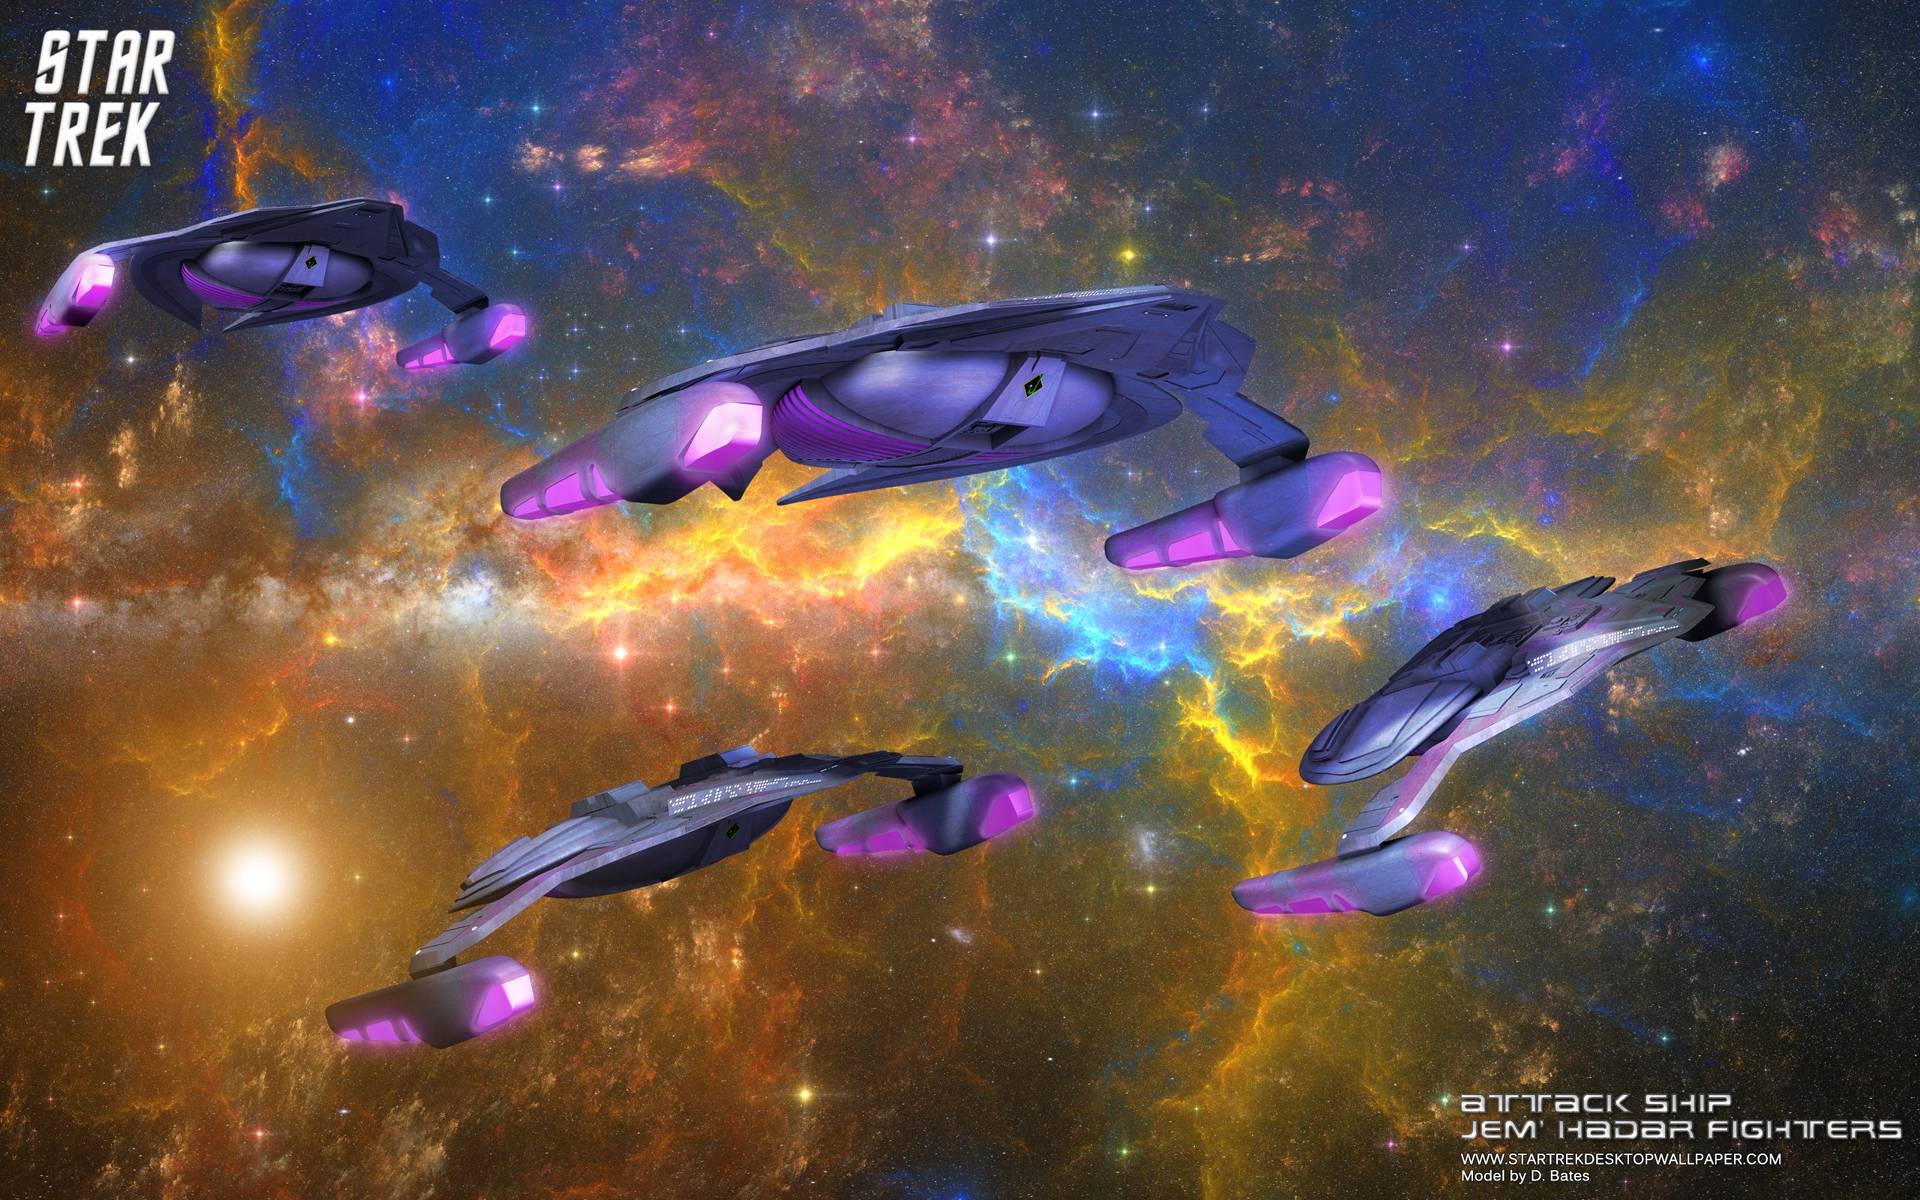 Star Trek Attack Ship Jem&Fighters, free Star Trek computer